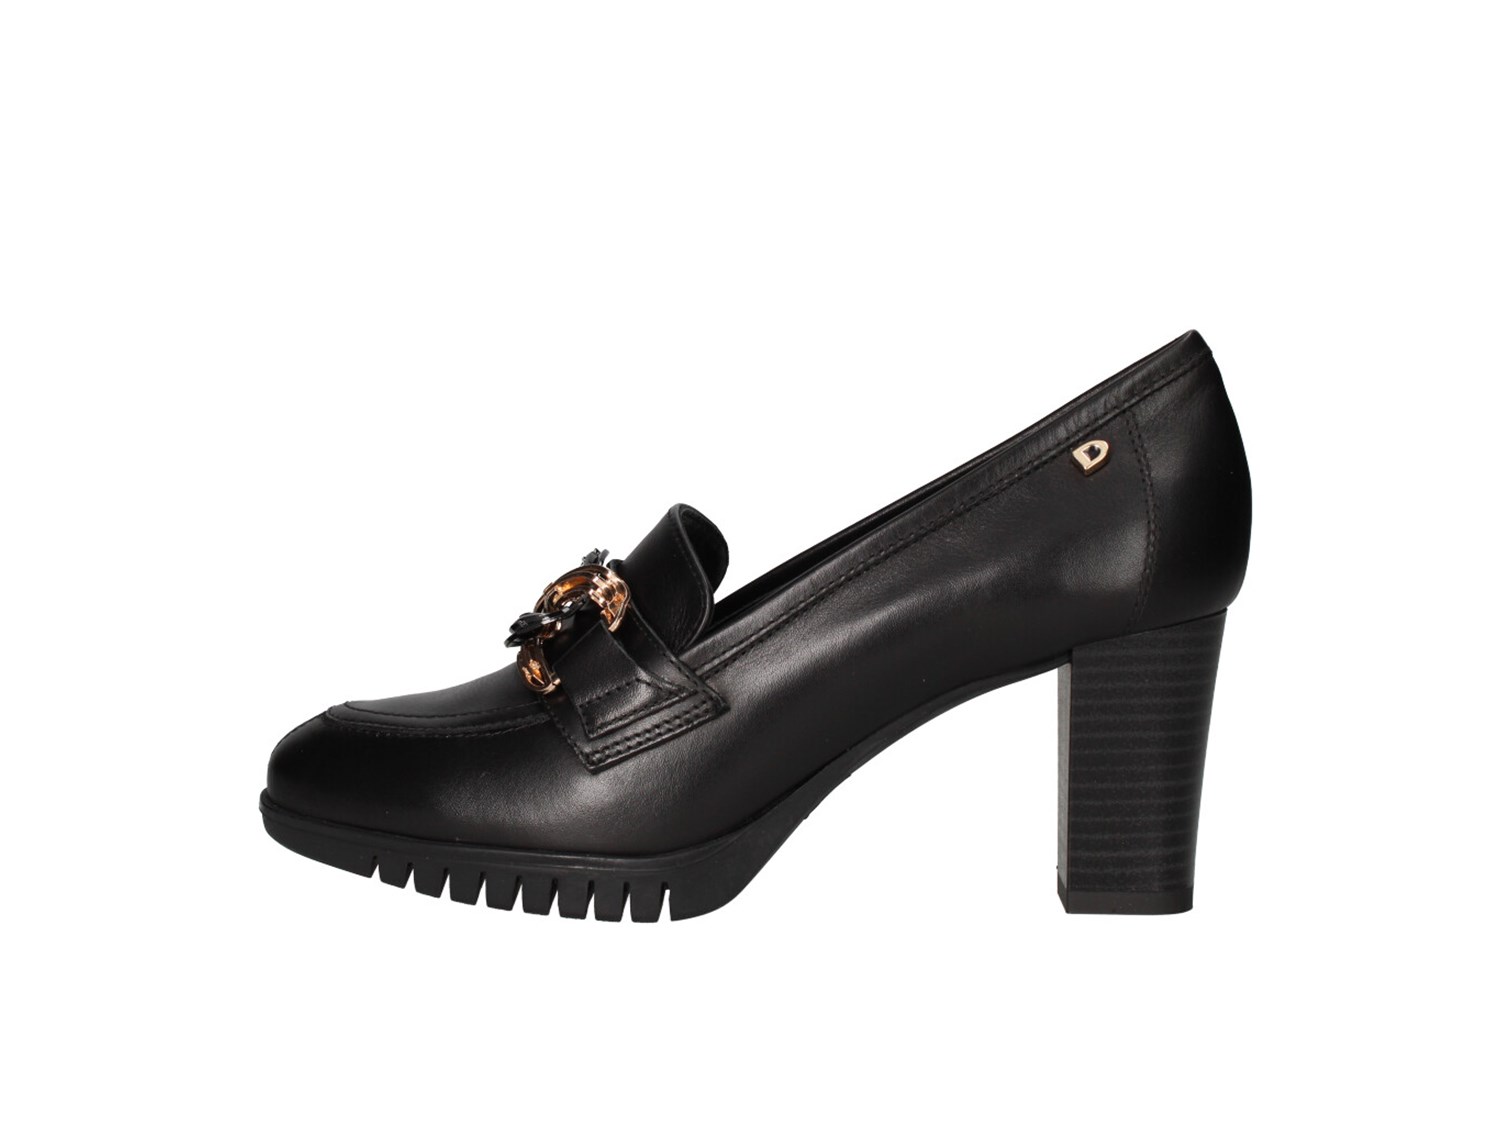 Donna Serena 264781dp Black Shoes Women Moccasin